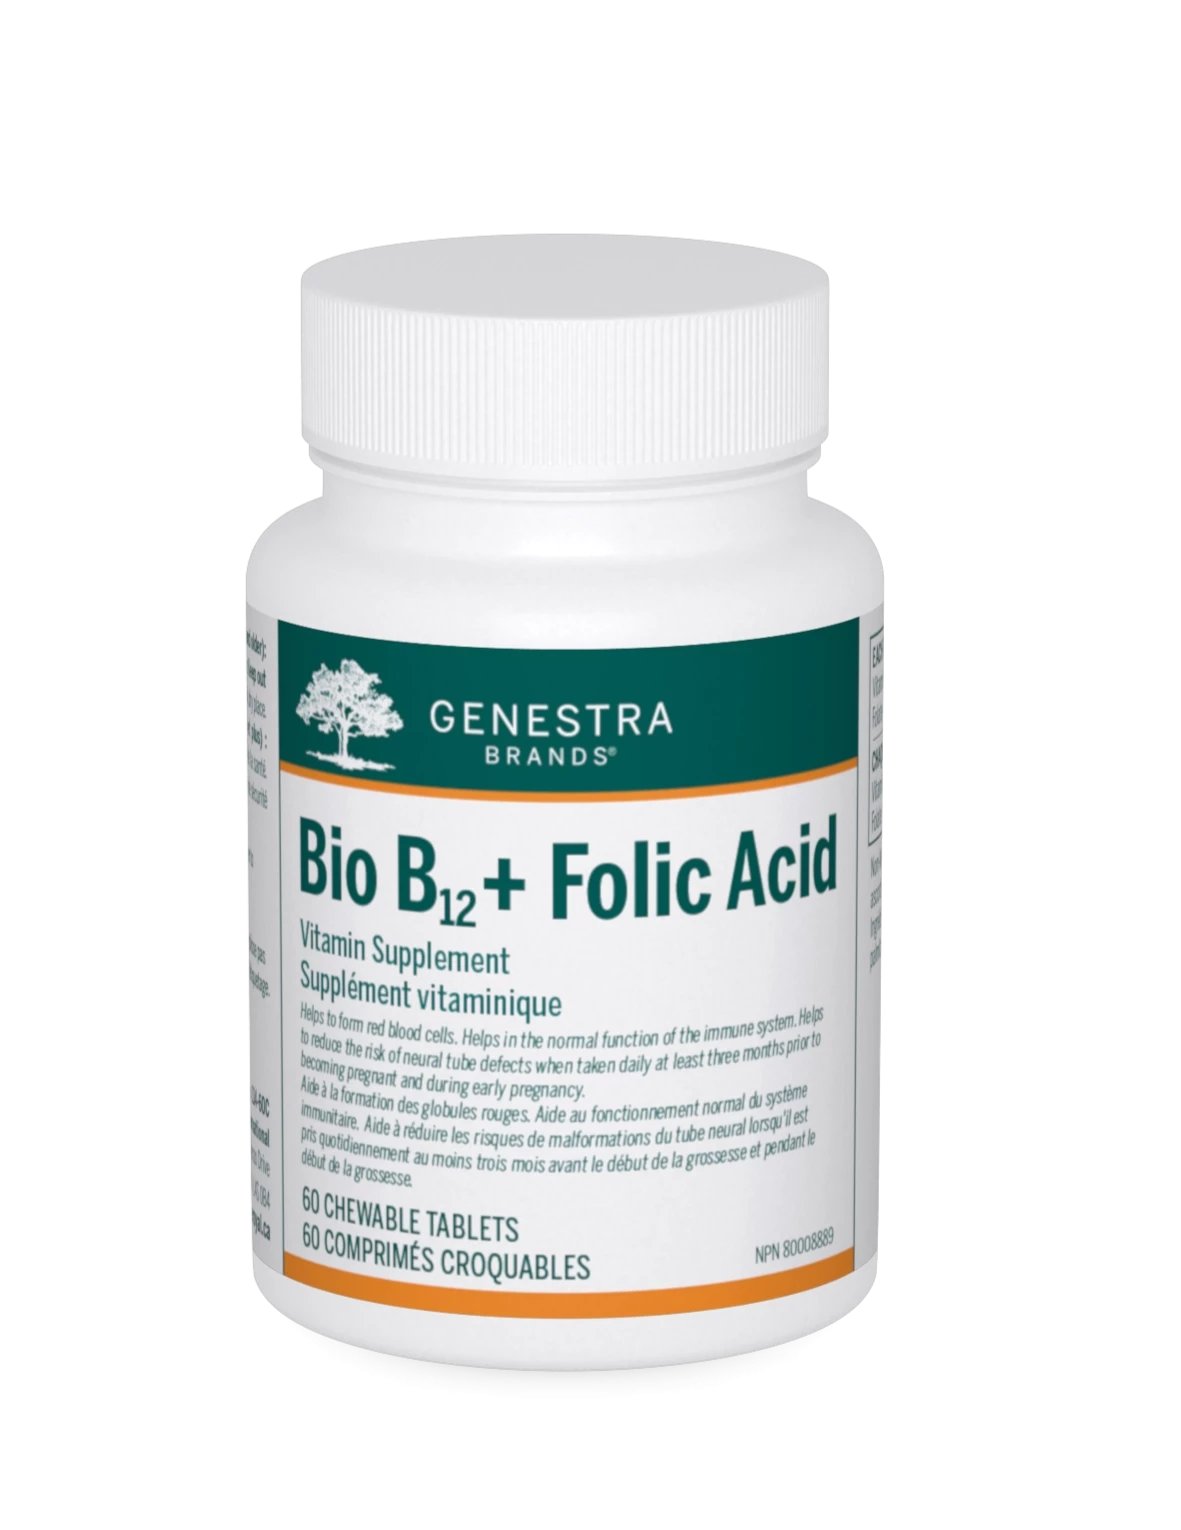 Genestra Bio B12 + Folic Acid (60 Chewable Tablets)